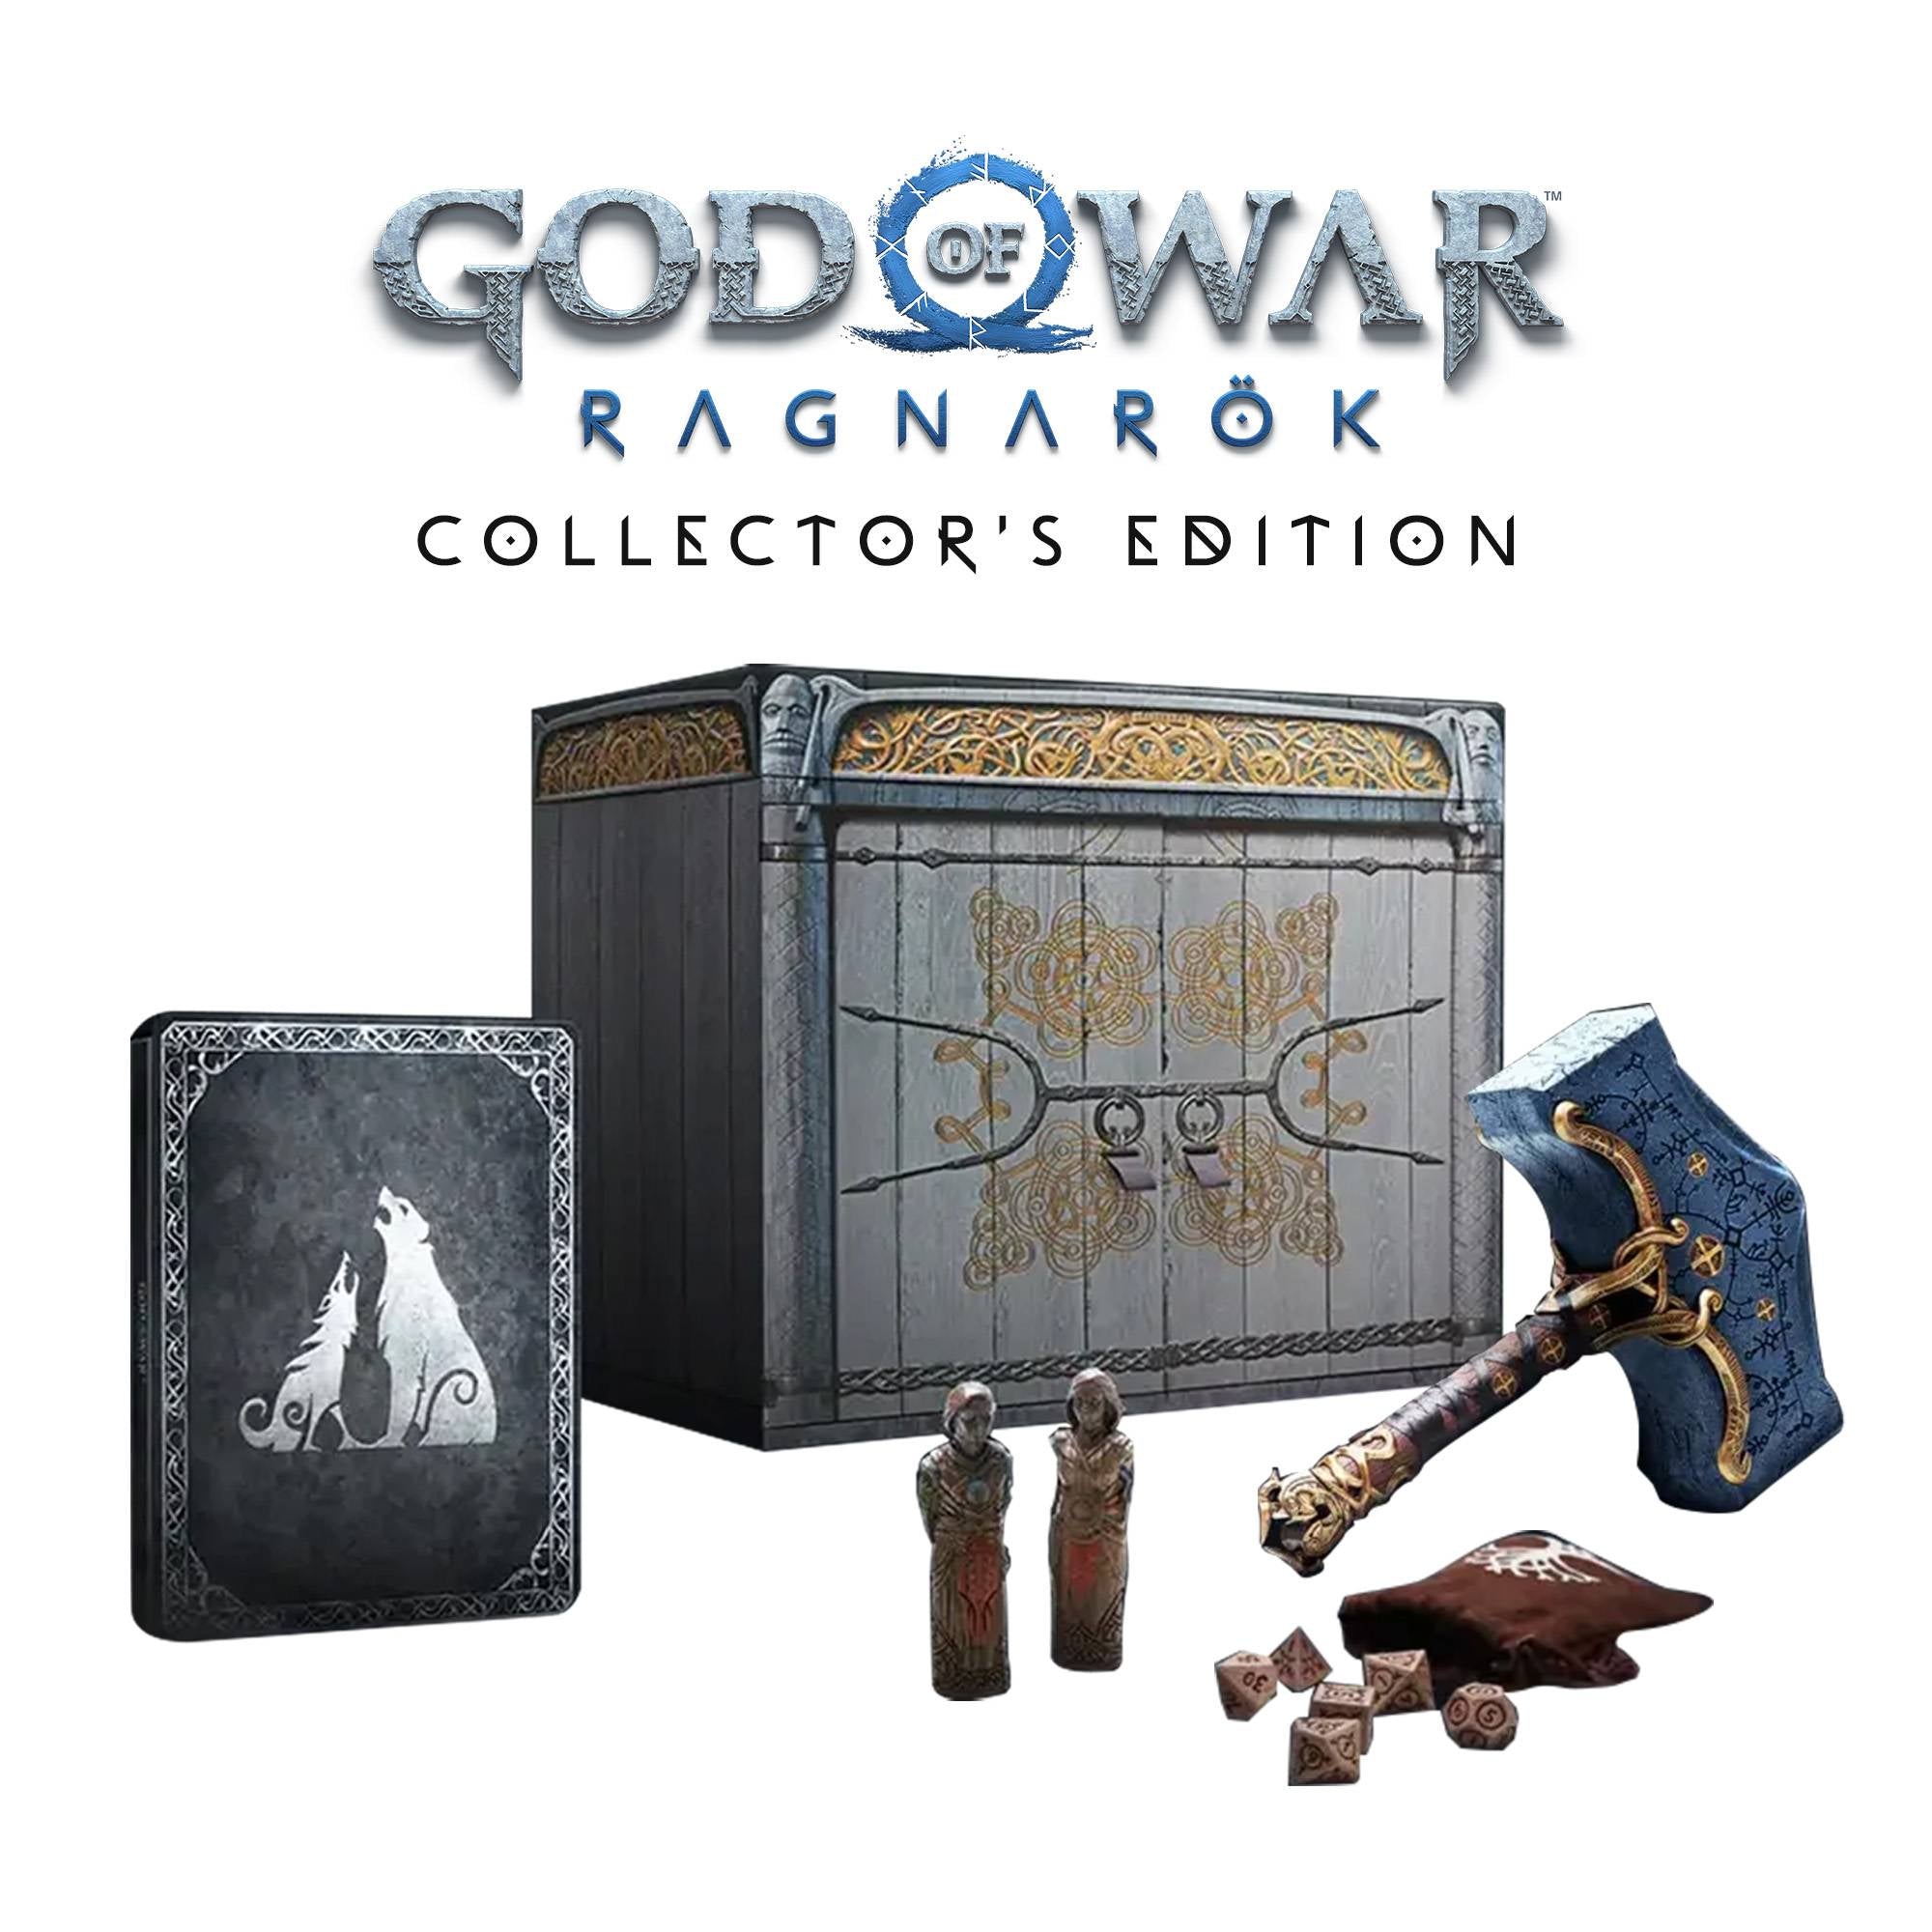 God of War™: Ragnarok Collector's Edition – PS5 & PS4